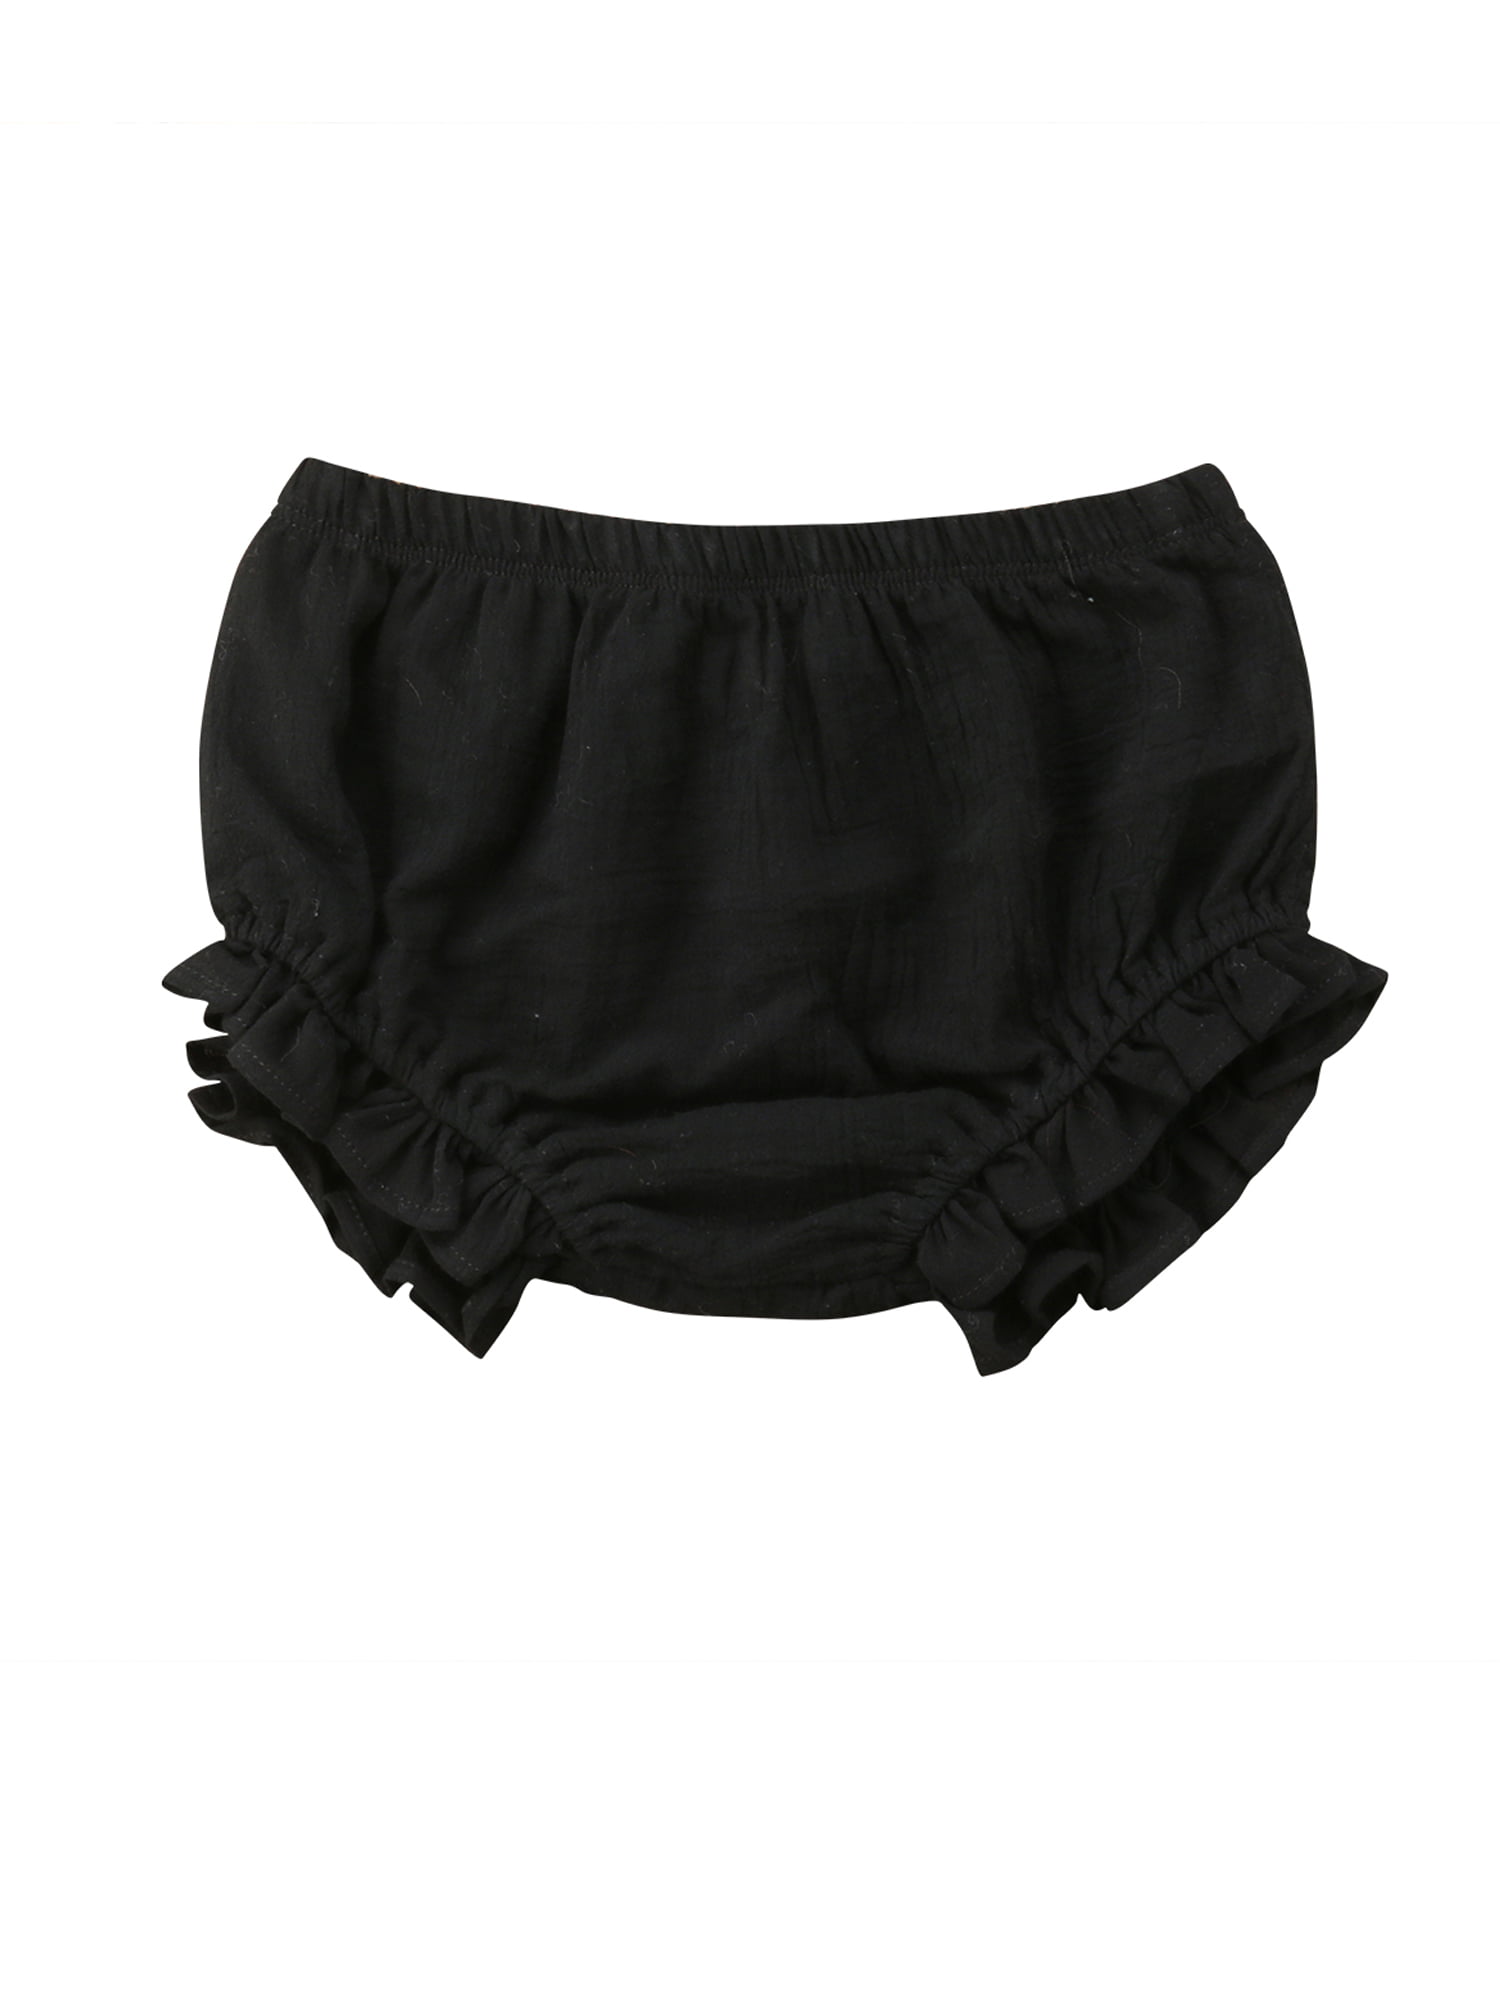 Baby Girl Ruffle Bloomer Pettiskirt Panties Diaper Cover Nappy Shorts Briefs 